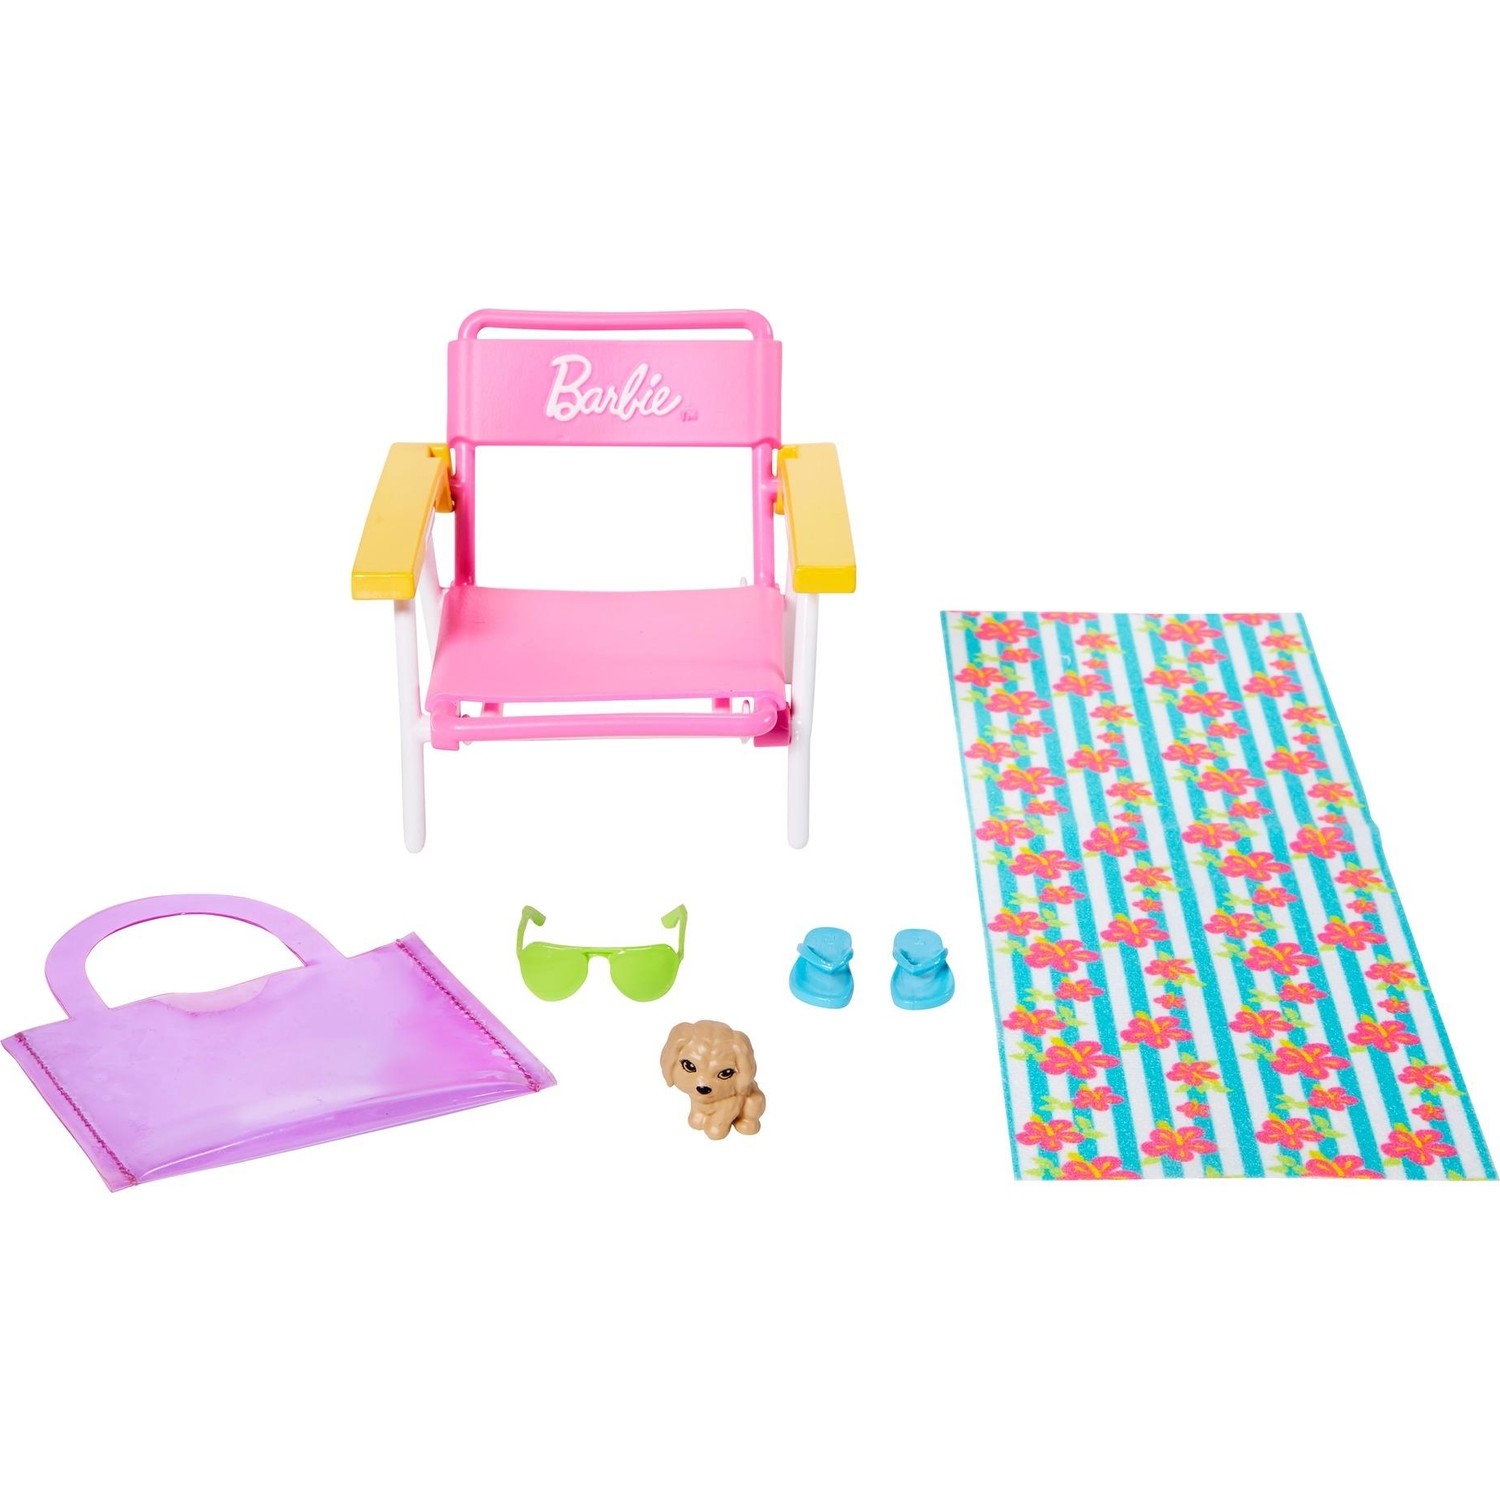 Игровой набор Barbie Home Accessory Packs GRG56 набор игровой нордпласт гараж барби 431228